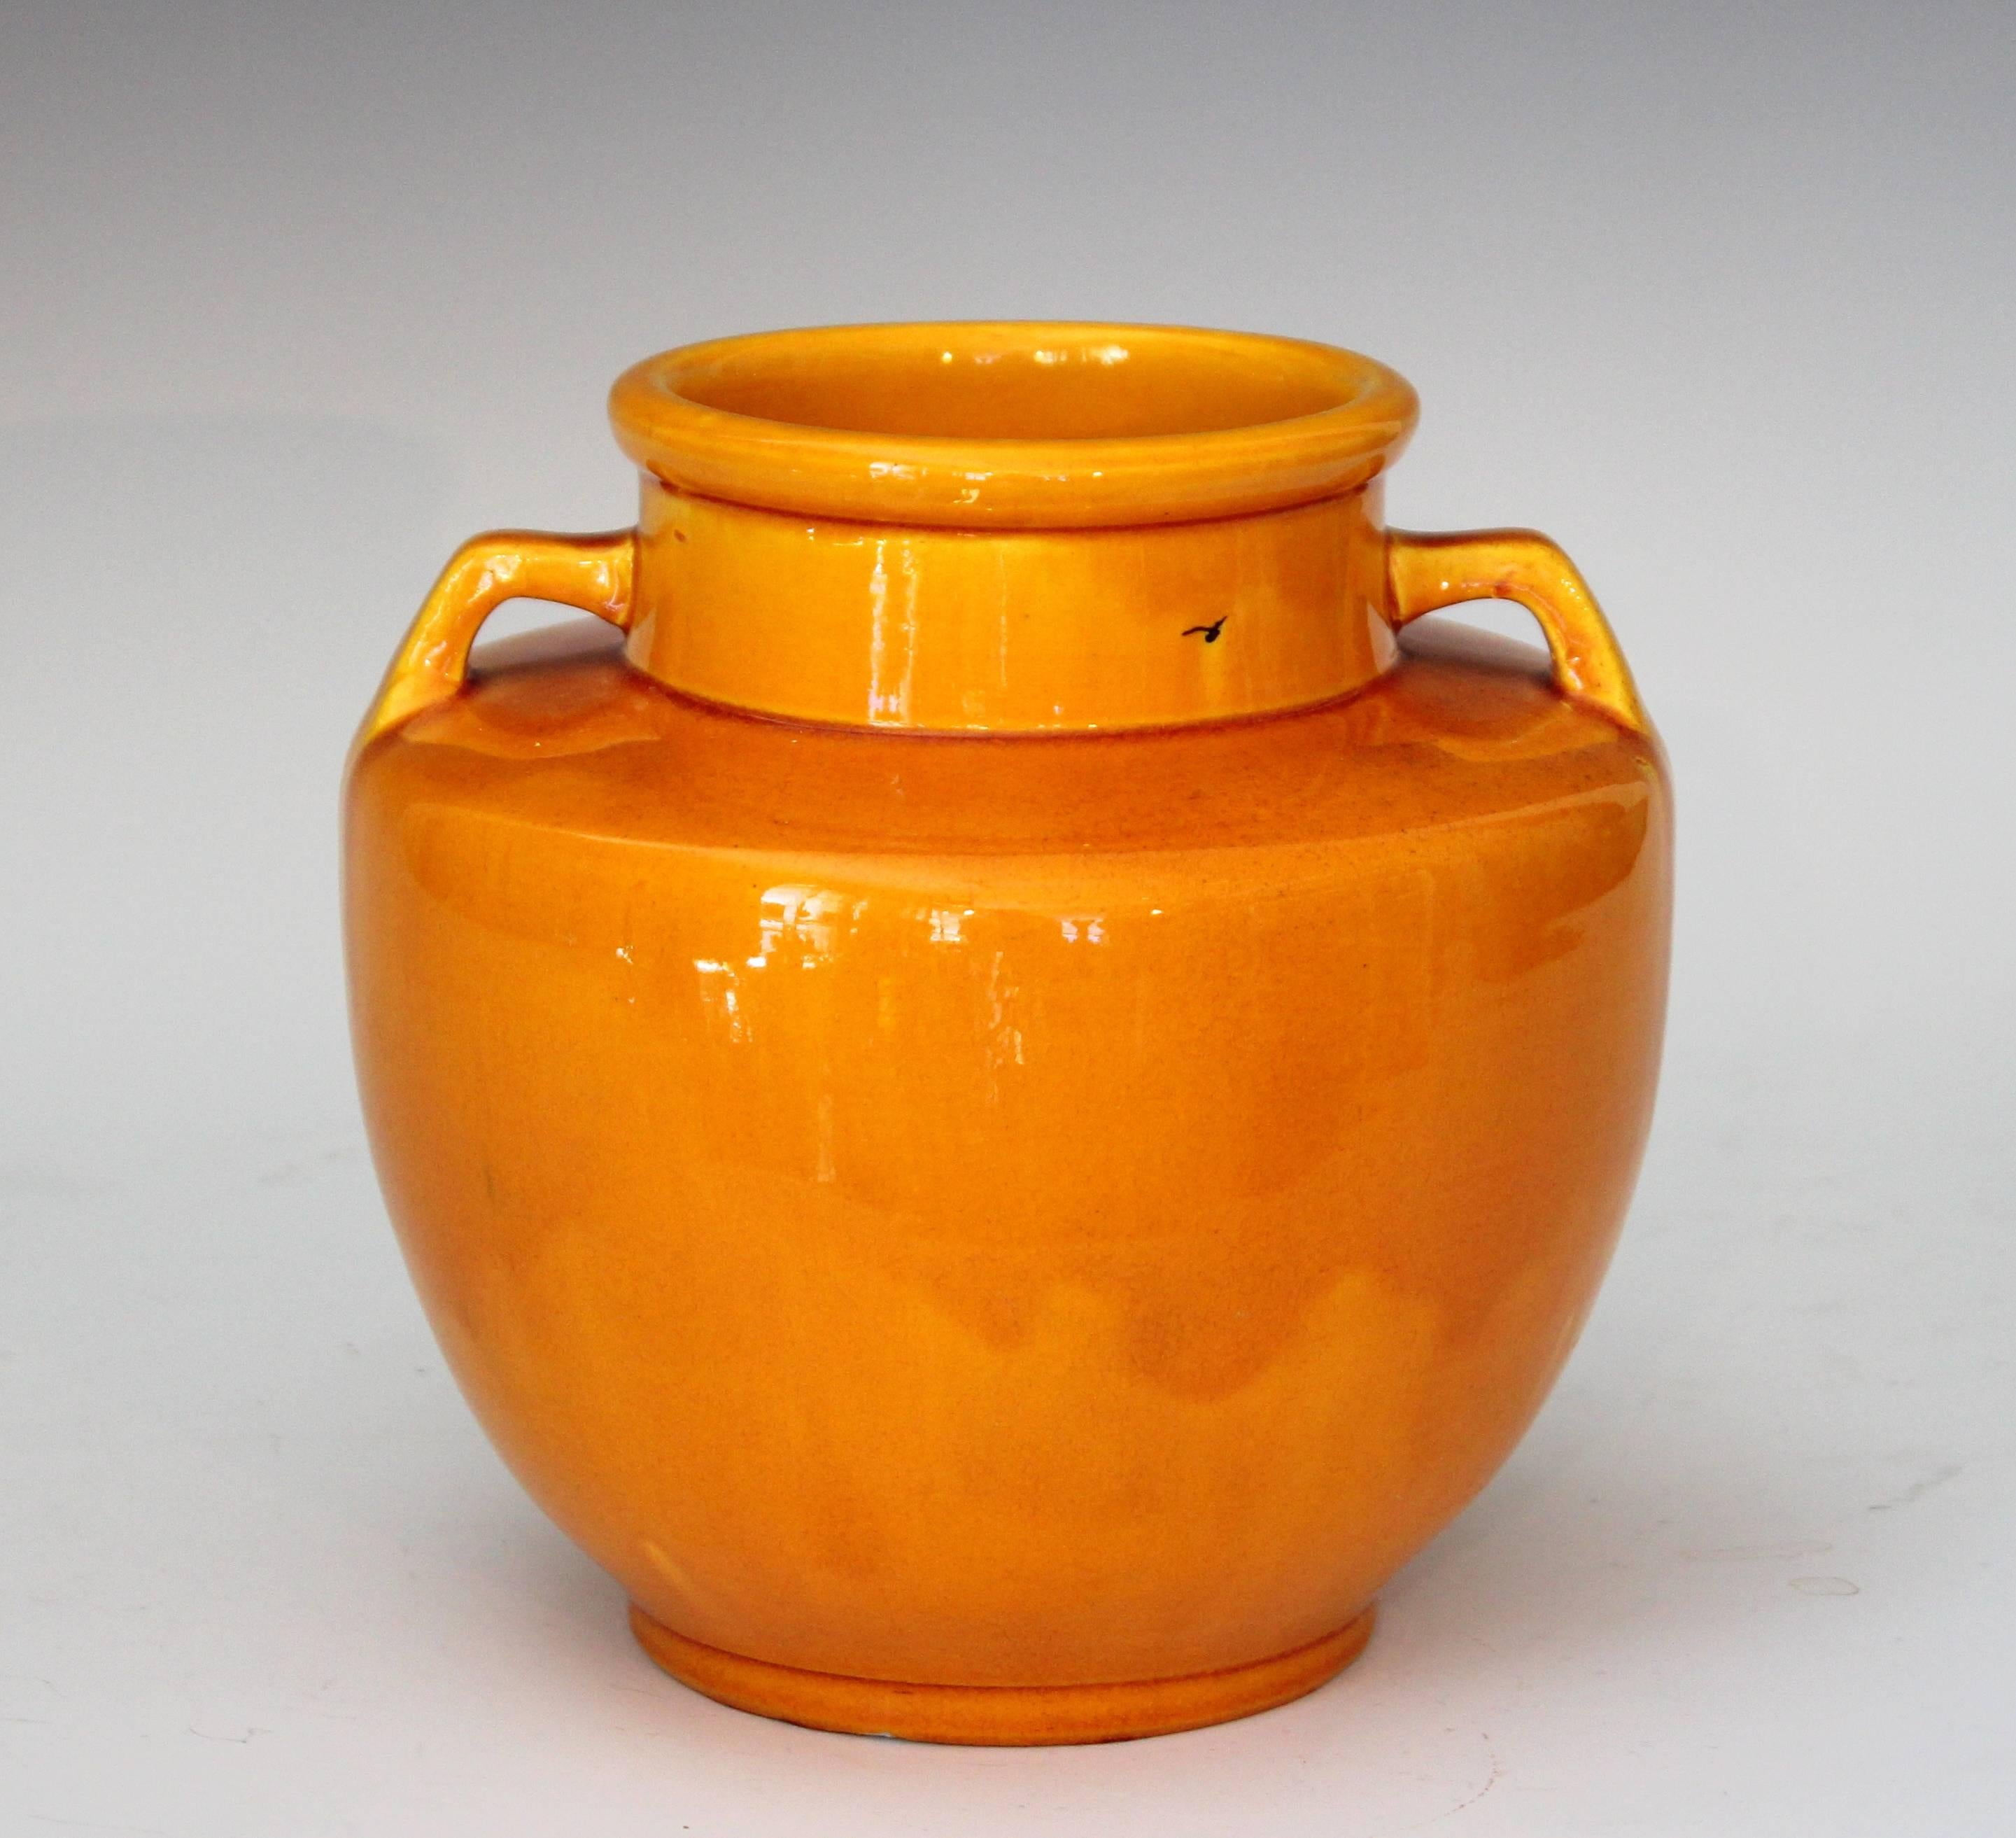 Vintage hand-turned Awaji vase with sleek Art Deco form and bright yellow glaze, circa 1930. Measures: 7 1/4